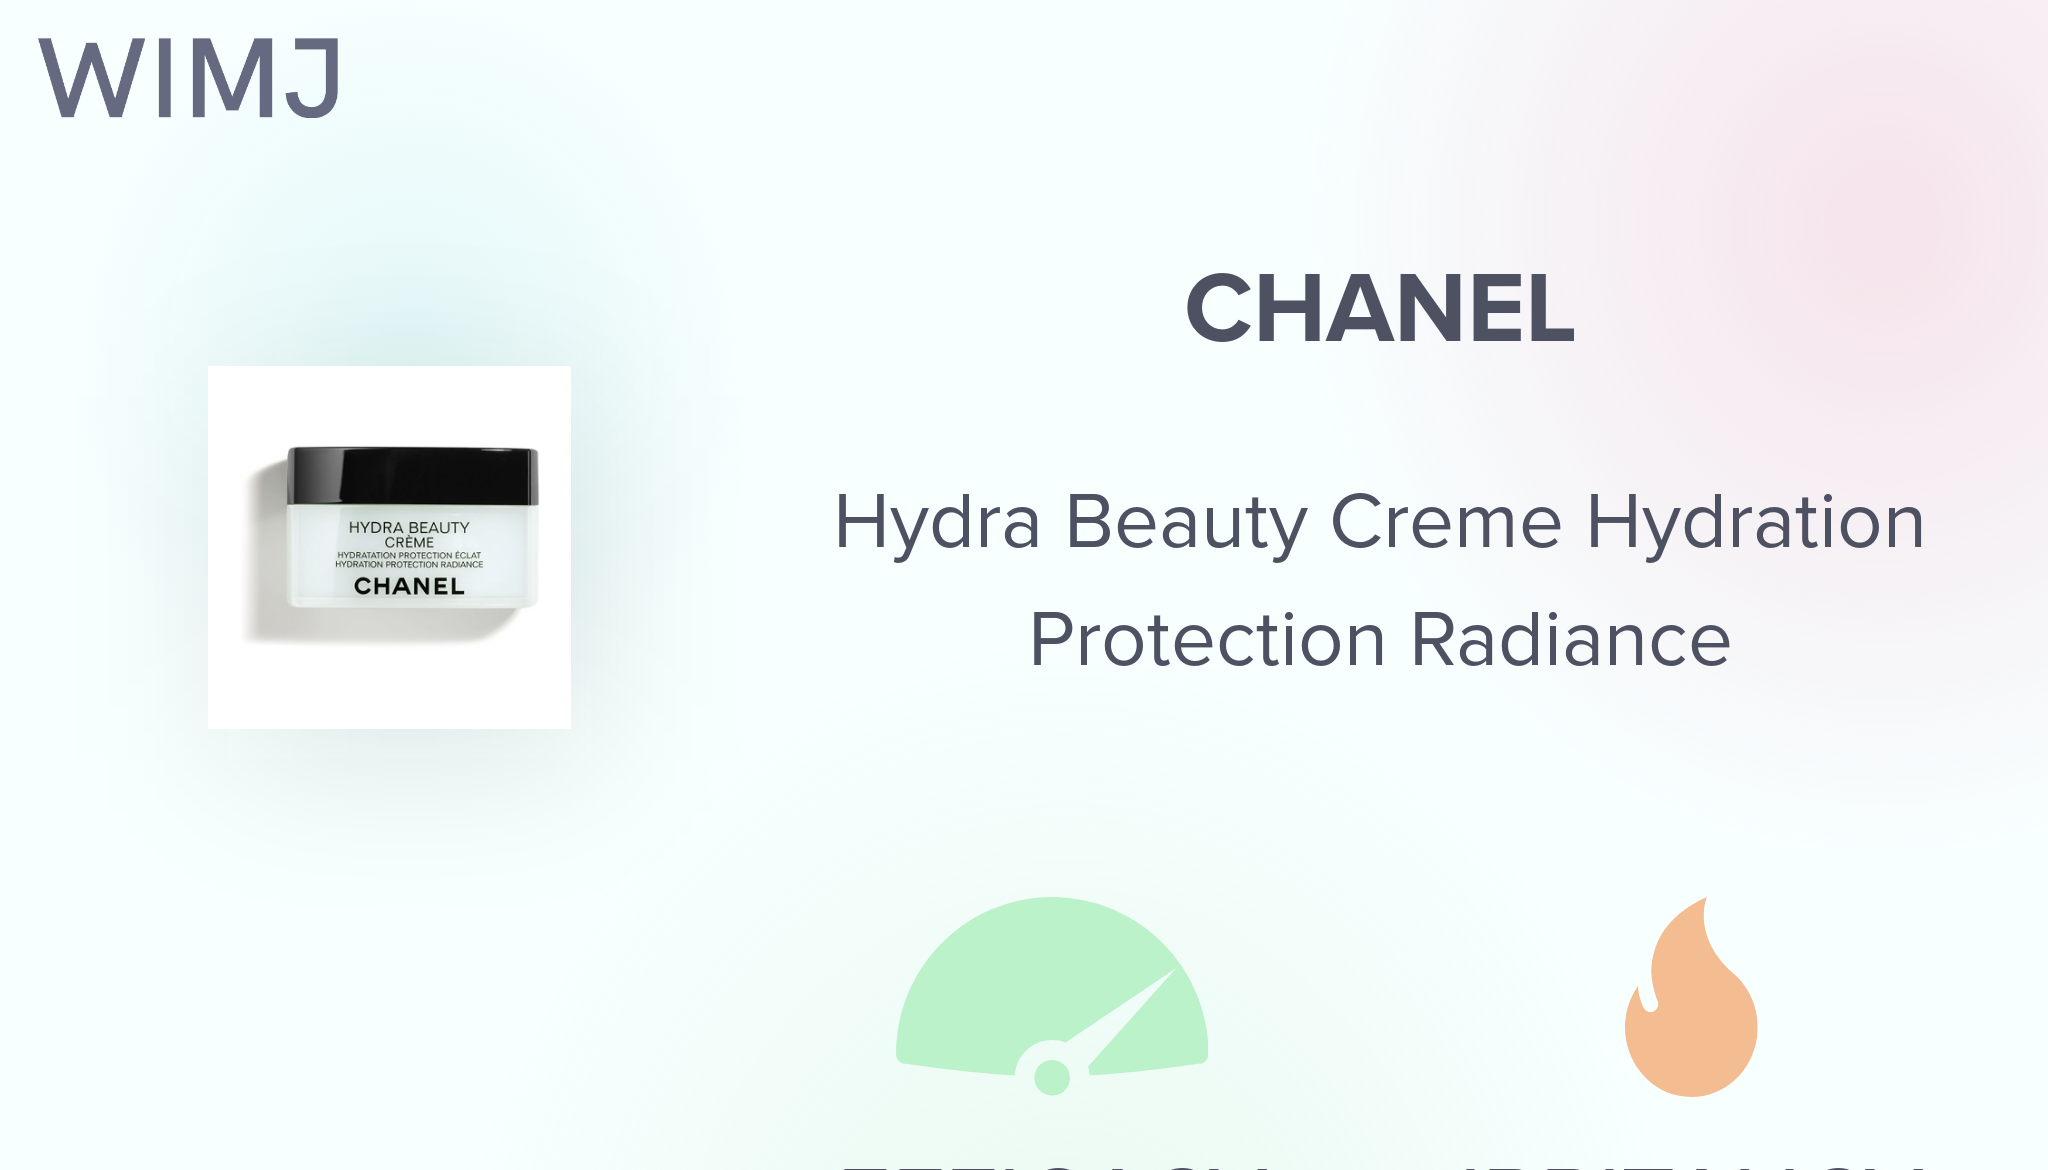 CHANEL Hydra Beauty Essence Mist 48g